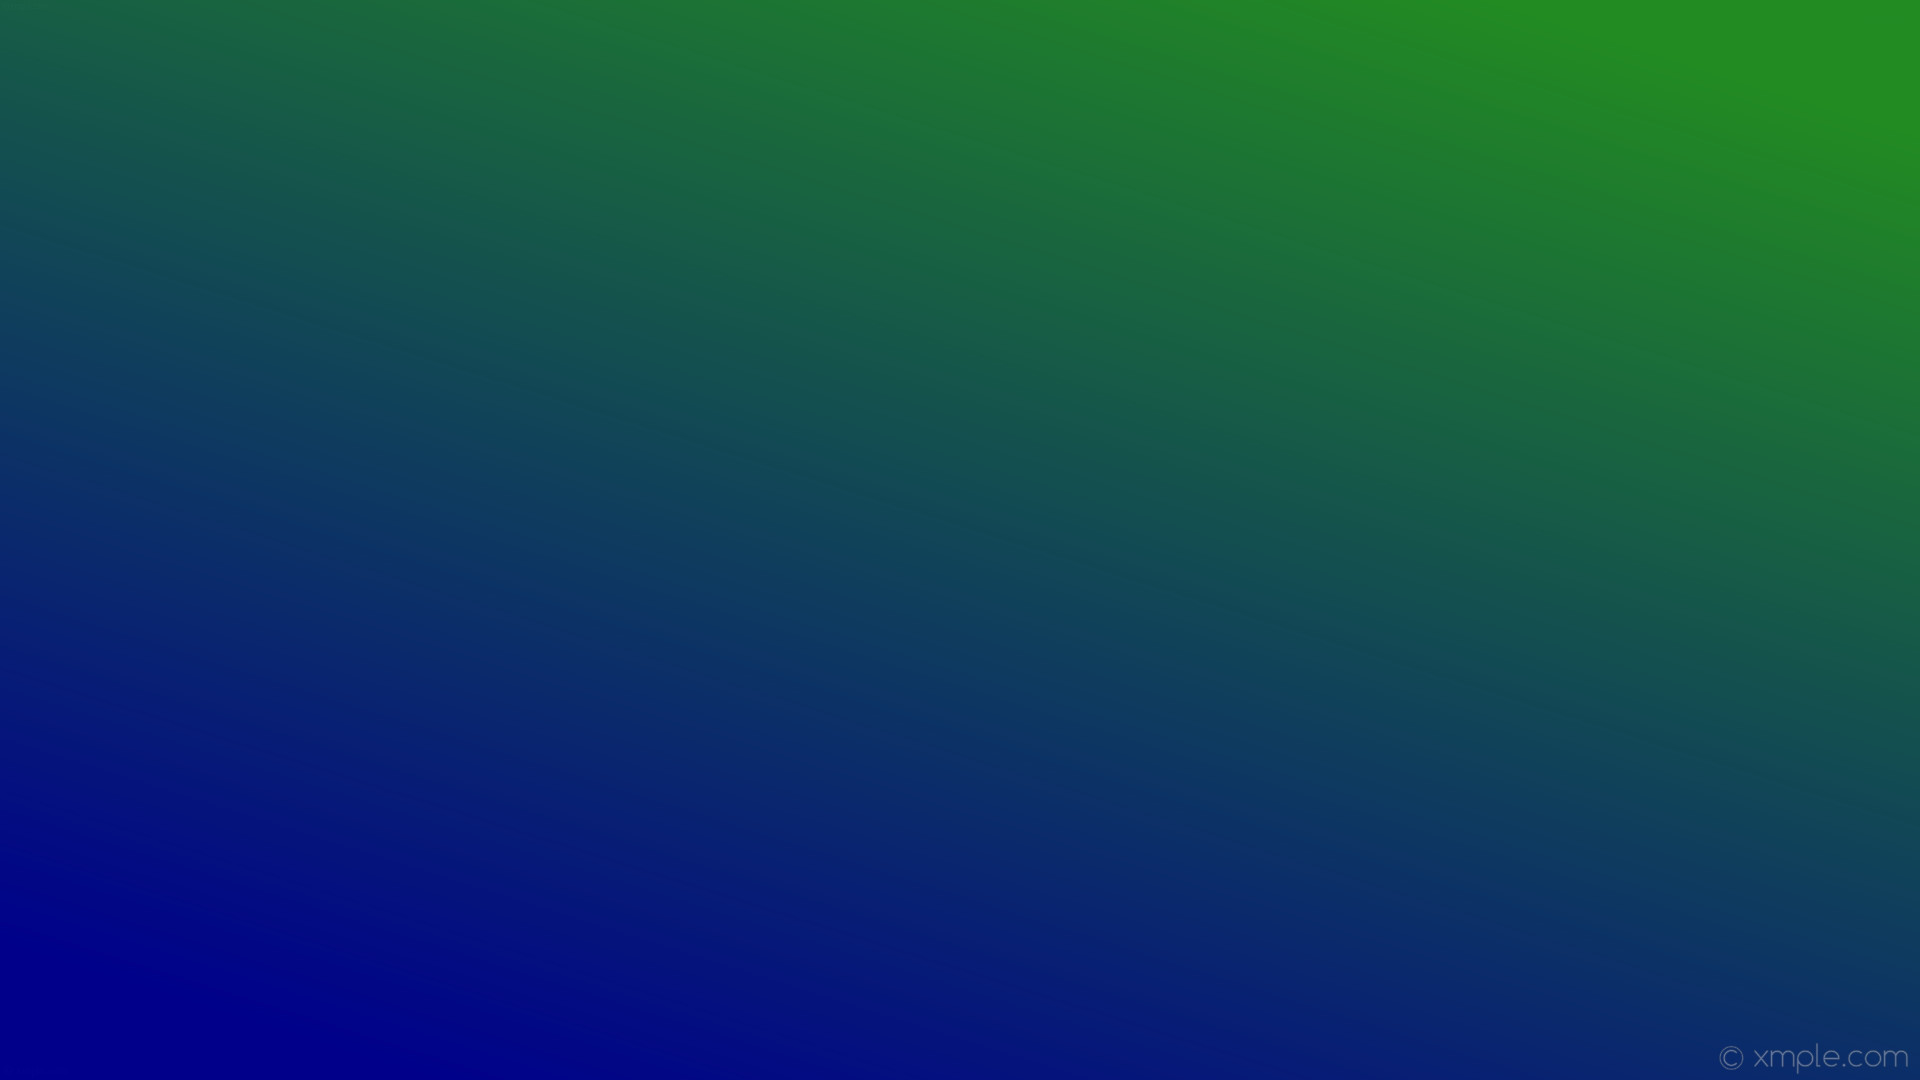 Wallpaper blue green gradient linear dark blue forest green b b22 225